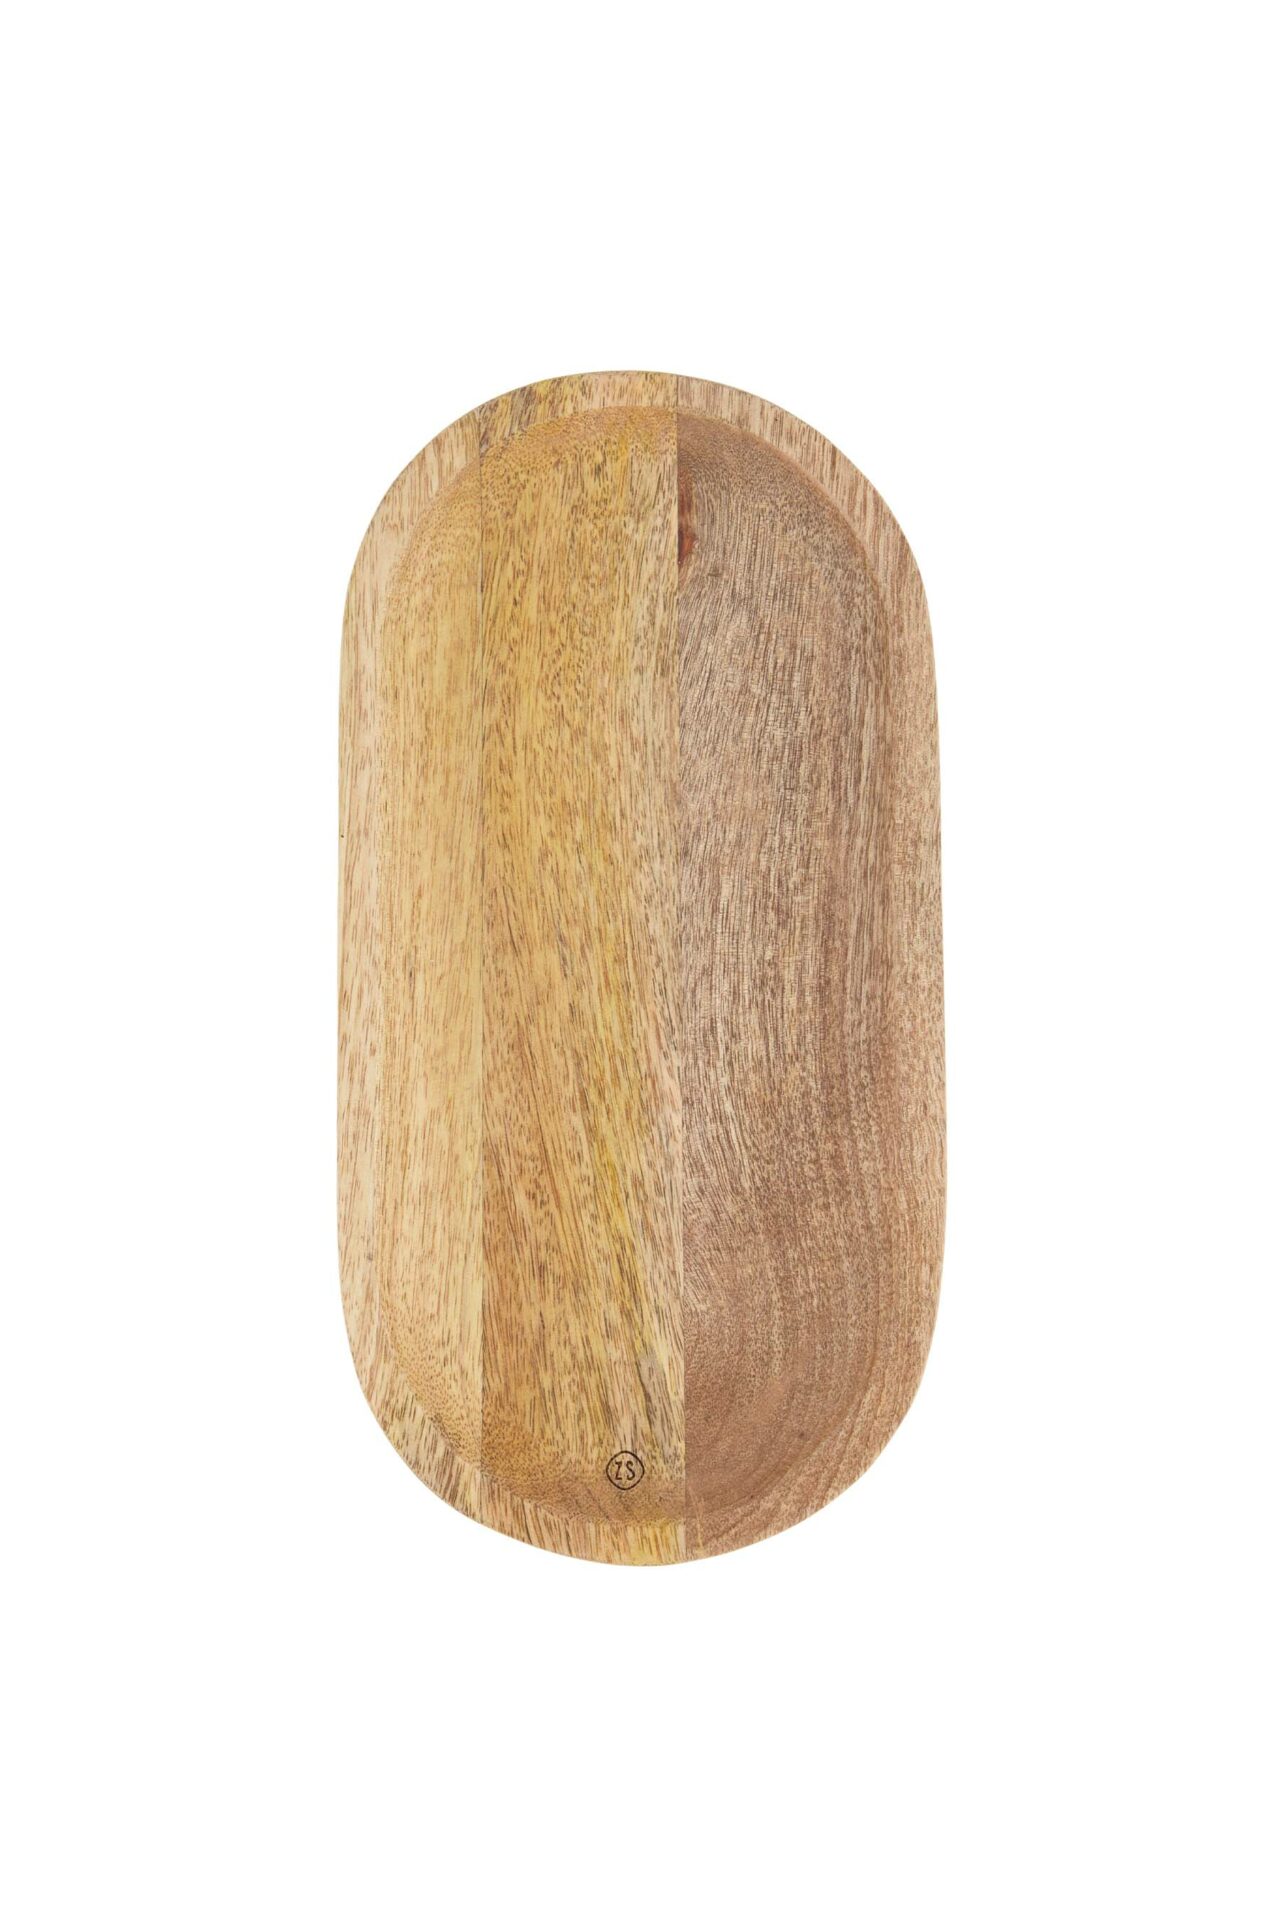 Zusss - ovalen stylingbord hout naturel